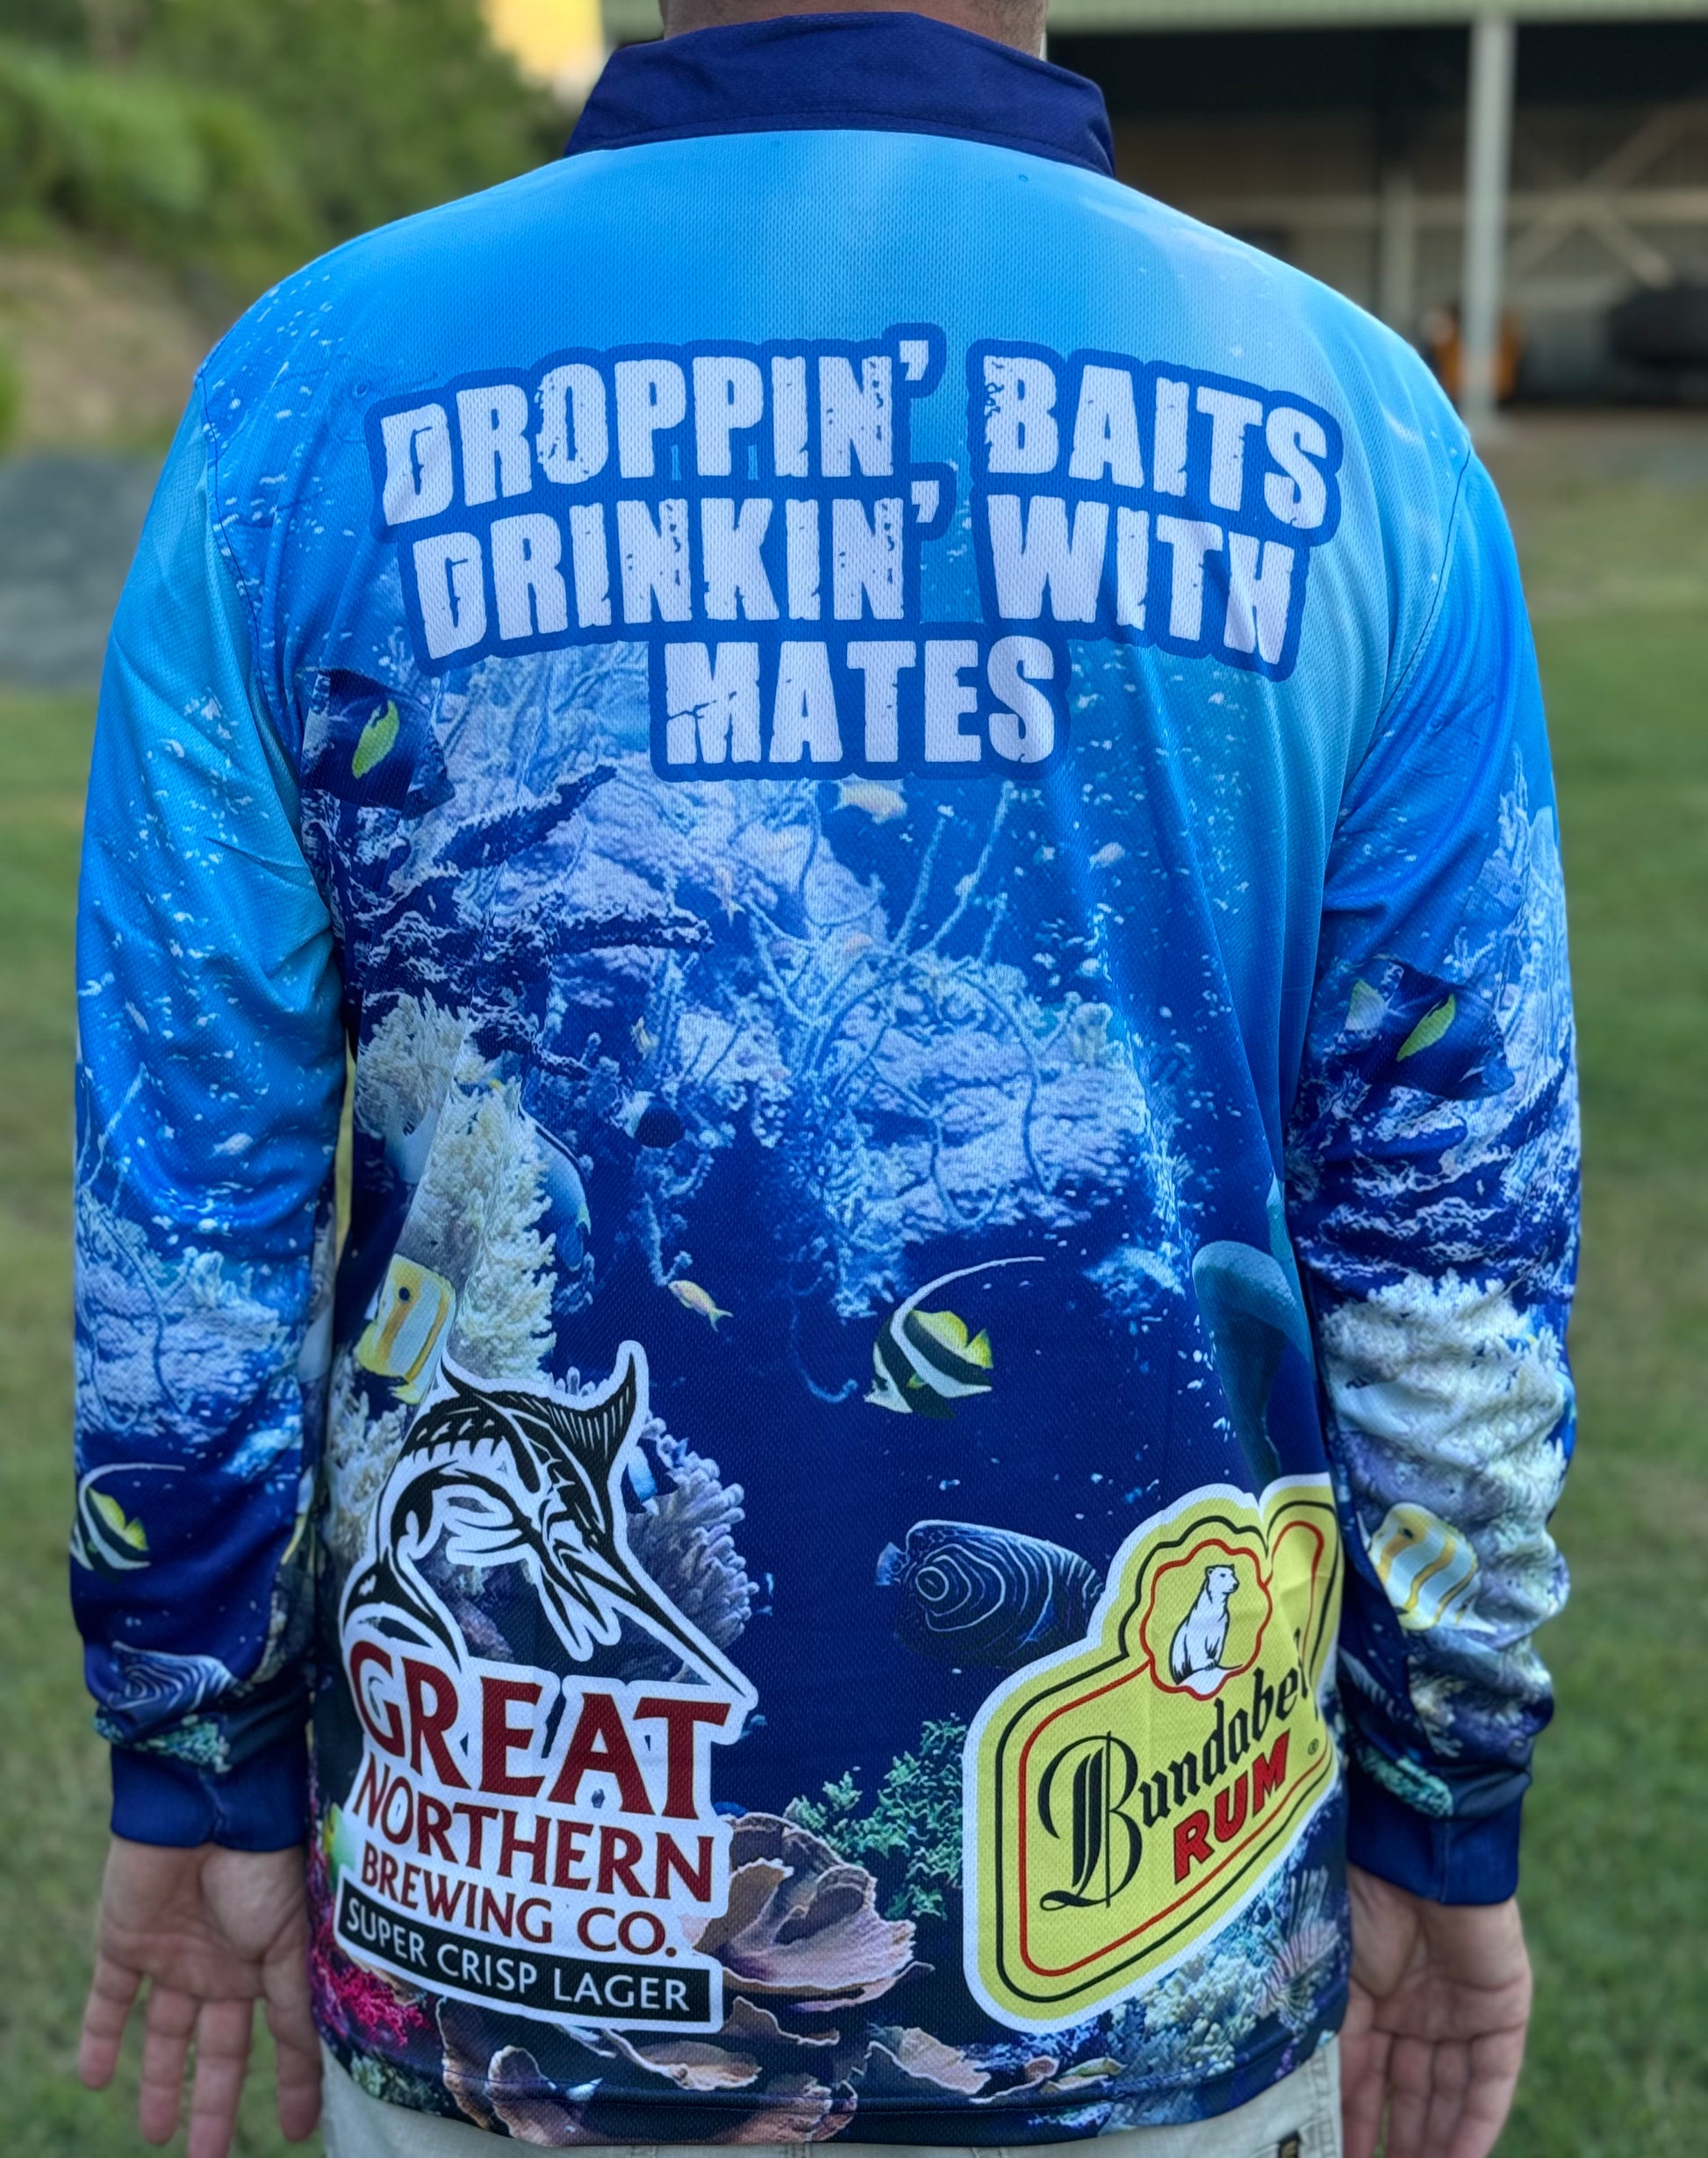 Custom Sublimated Long Sleeve Fishing Shirt with Elastic Cuff